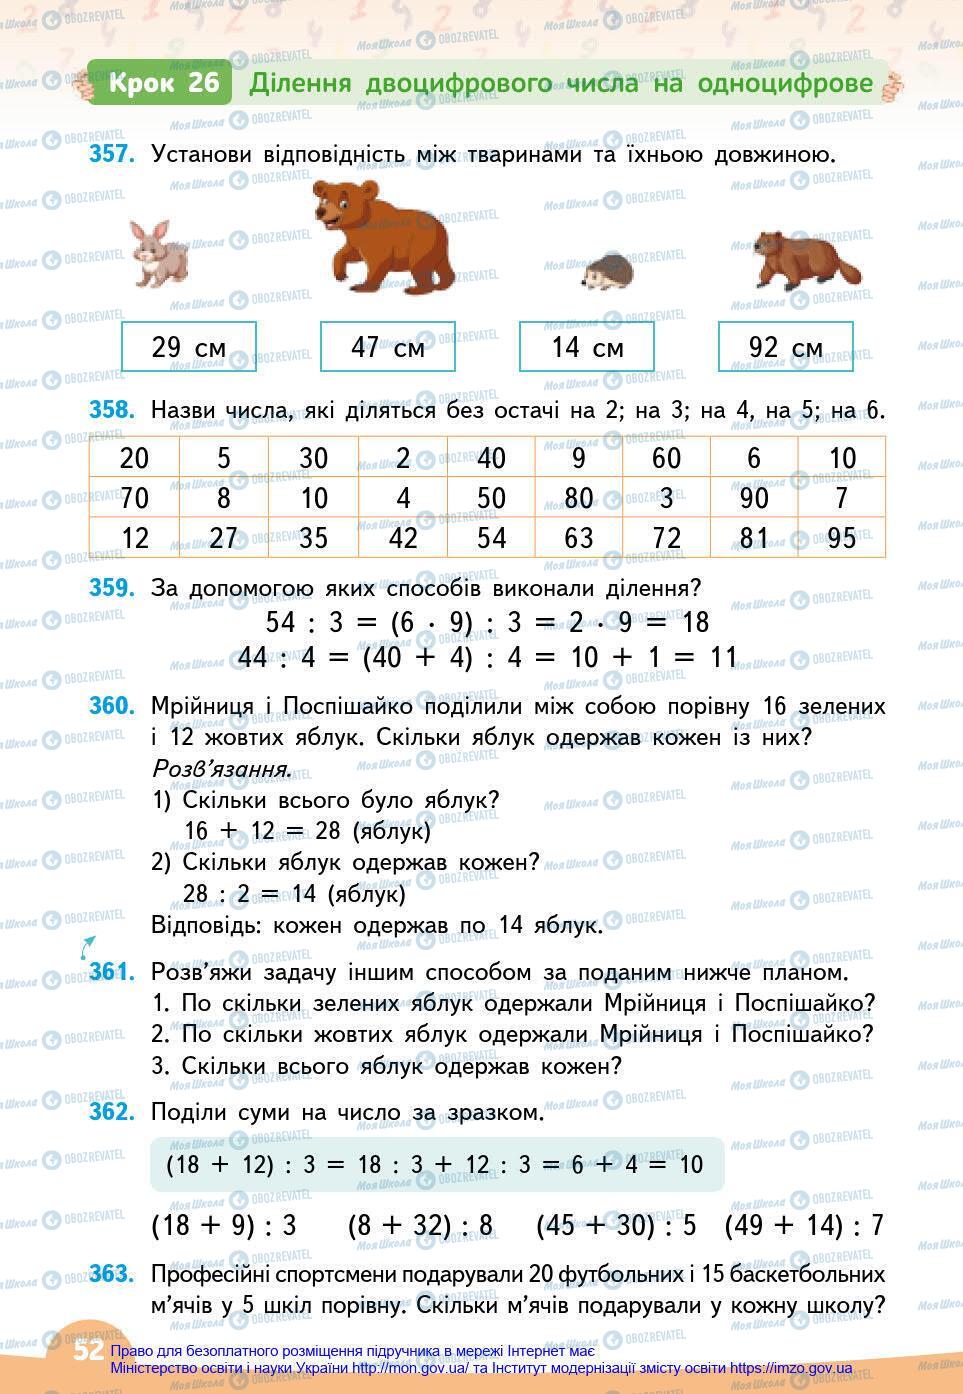 Учебники Математика 3 класс страница 52